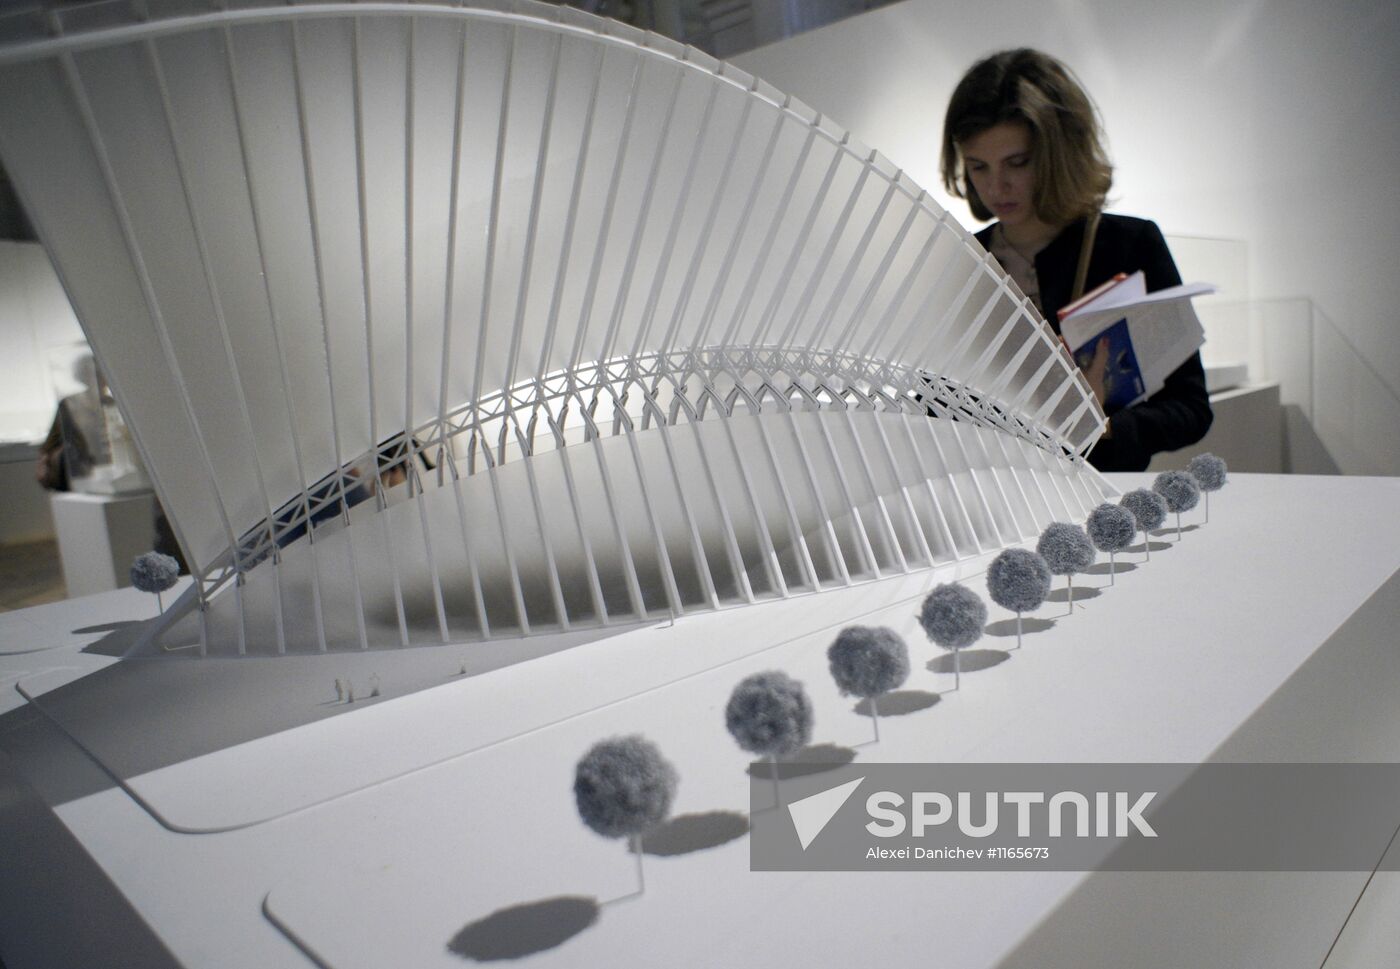 Santiago Calatrava's exhibition opens at Hermitage Museum